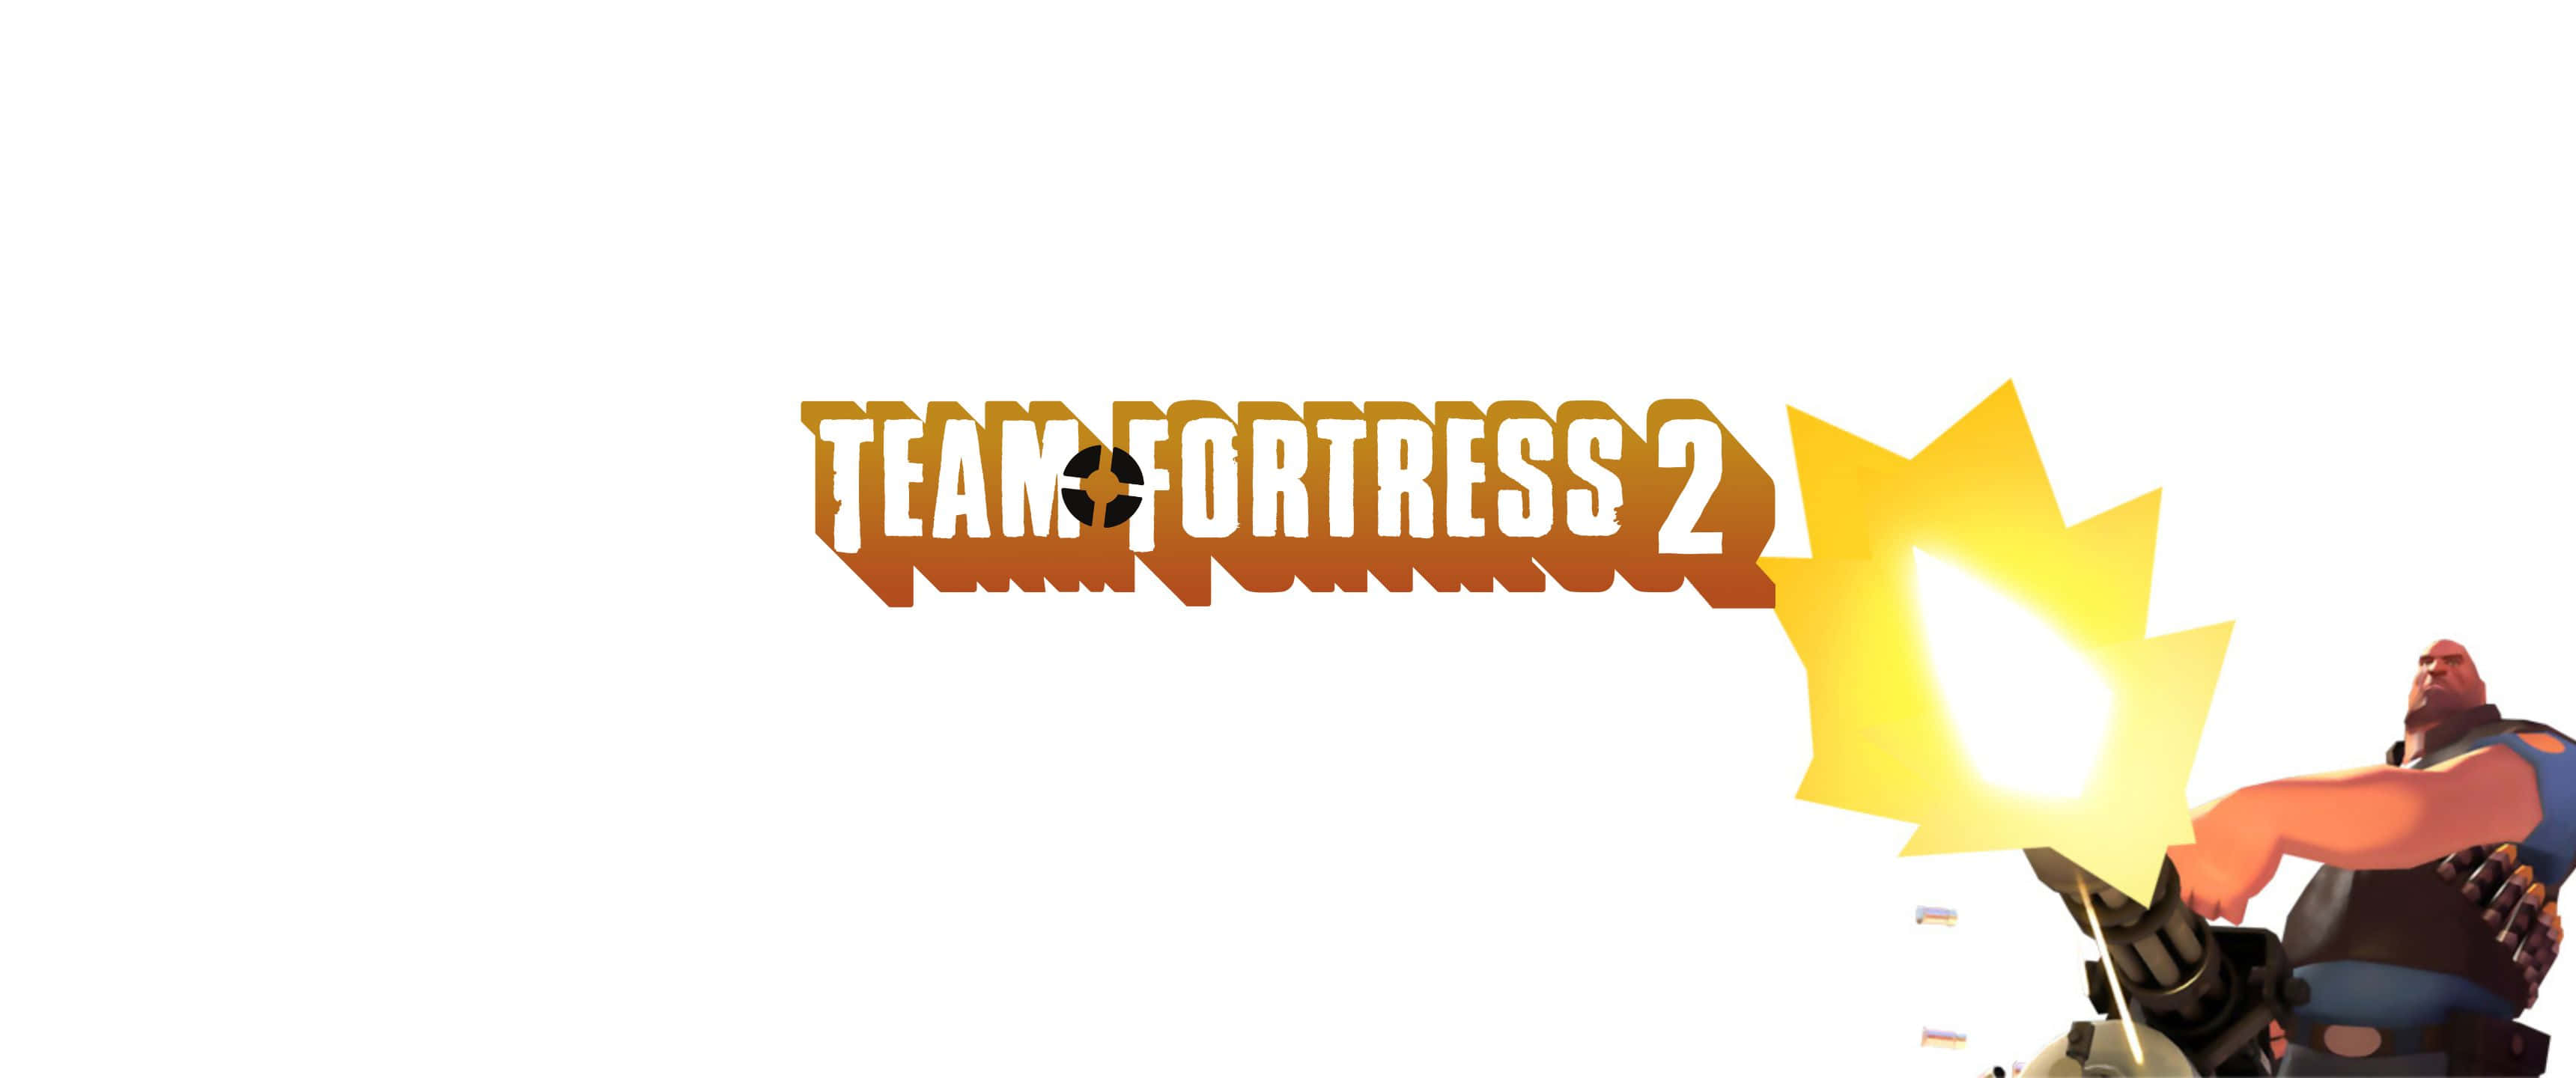 Team Fortress 2 in 4k Ultra HD Resolution